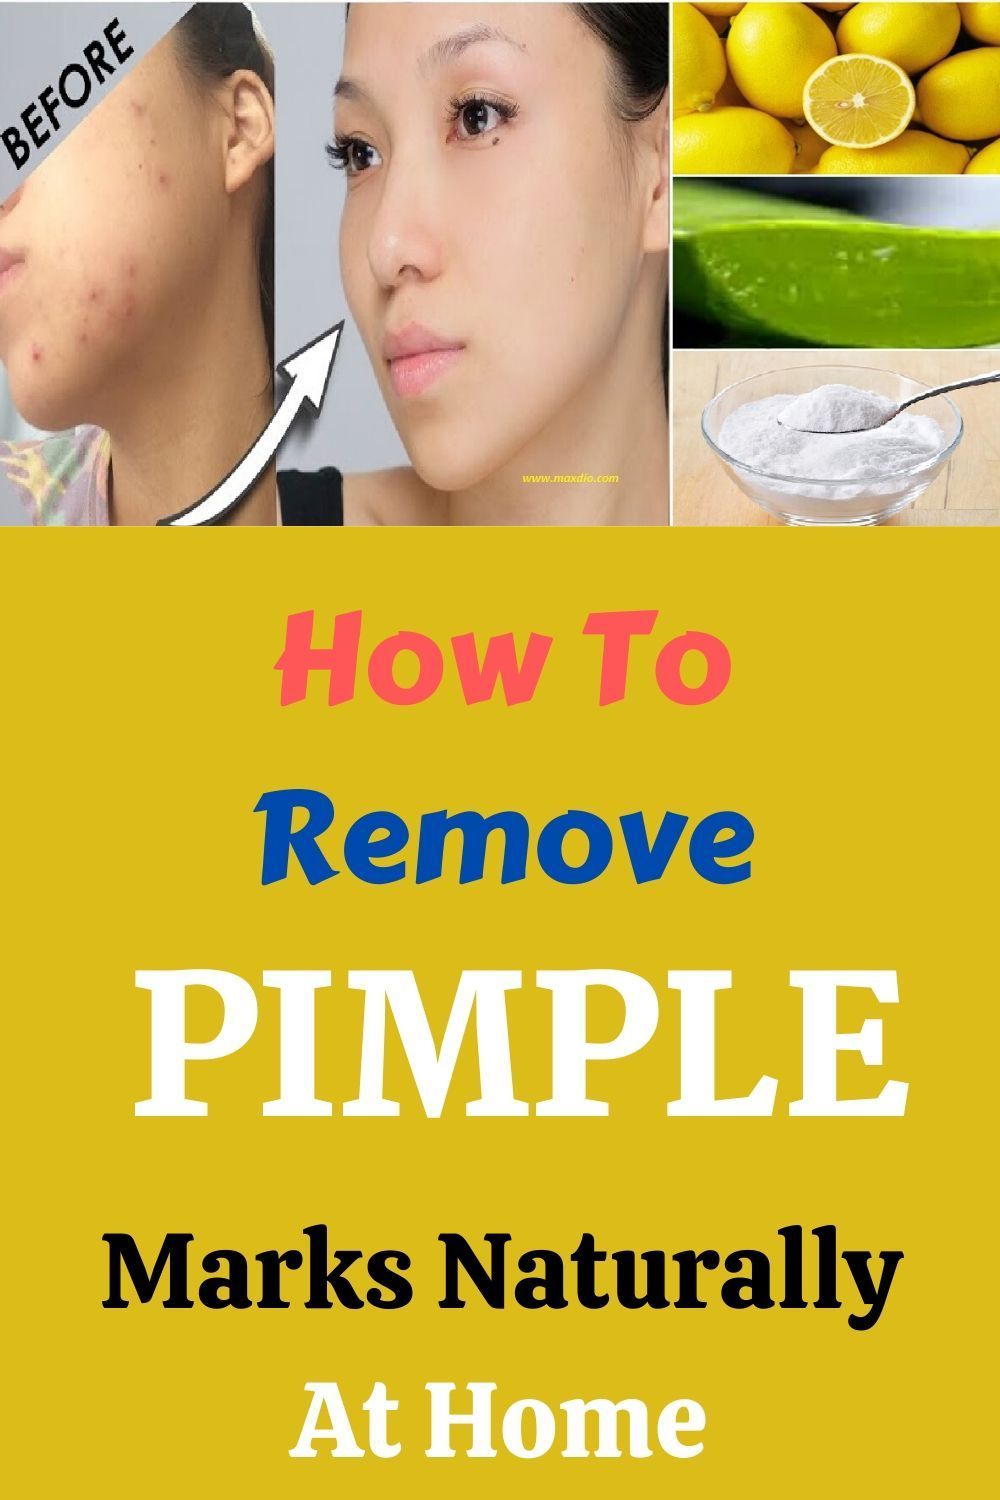 18 beauty Treatments pimples ideas